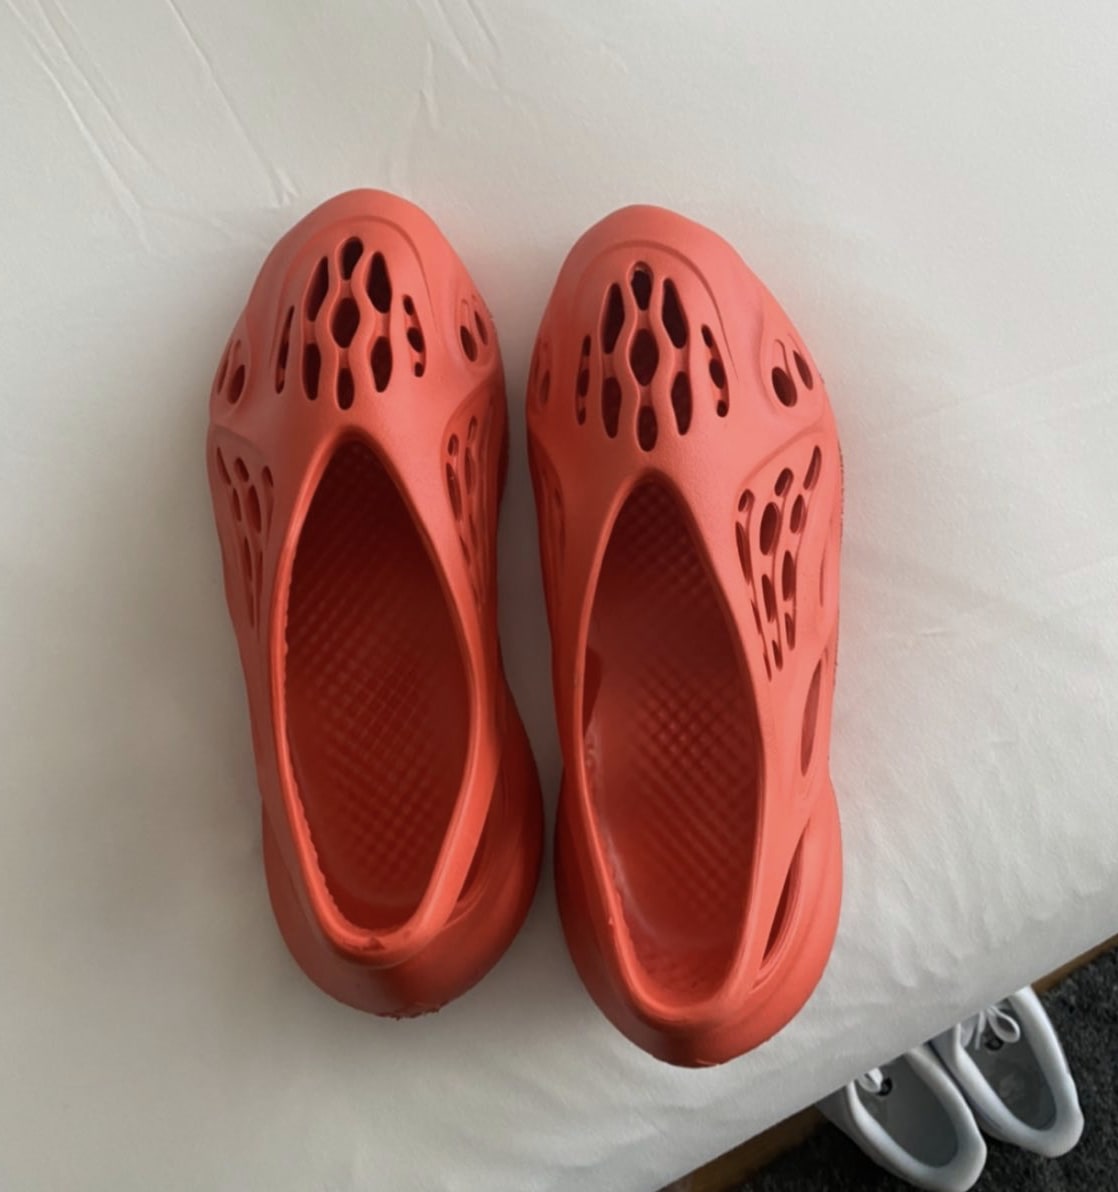 Adidas Yeezy Foam Runner Receives &quot;Red October&quot; Makeover